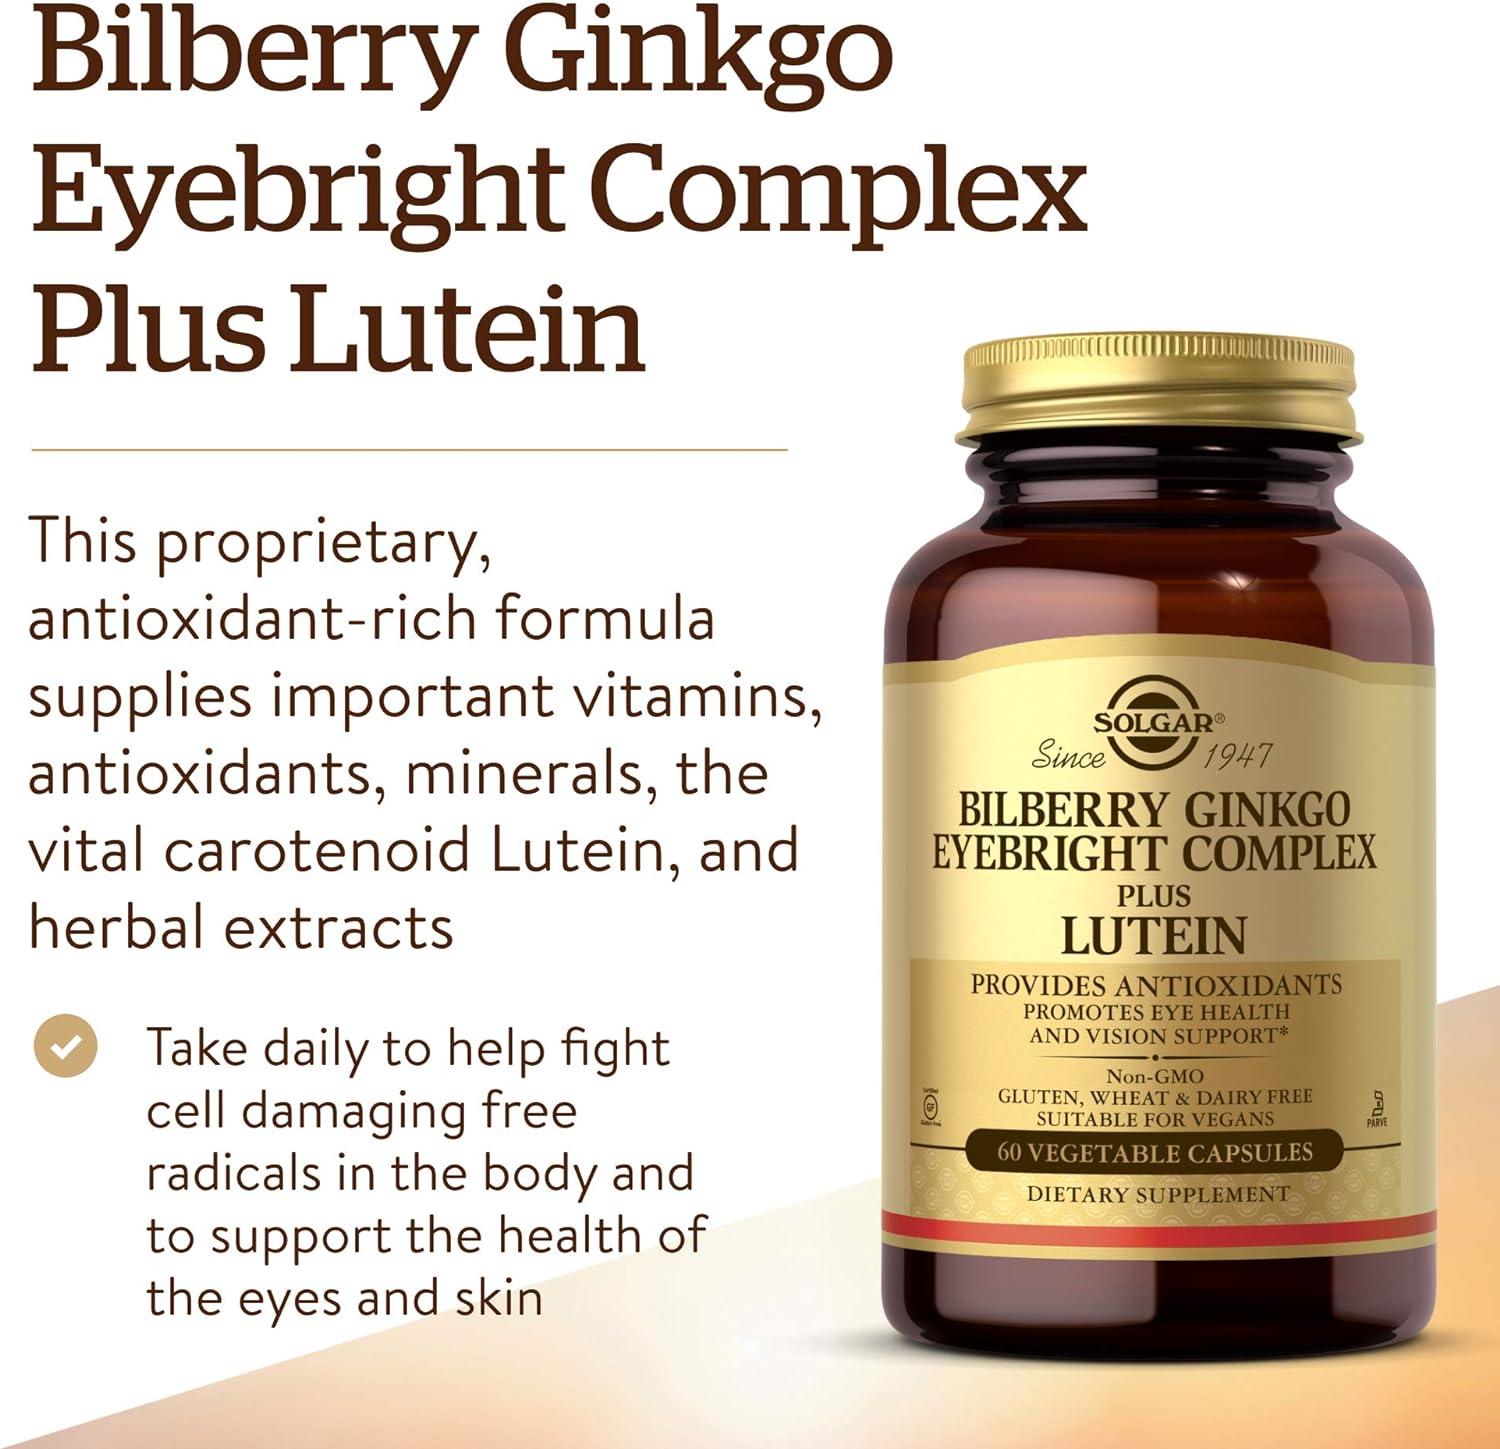 Solgar Bilberry Ginkgo Eyebright Complex Plus Lutein 60 Vegetable Capsules - Wellness Shoppee